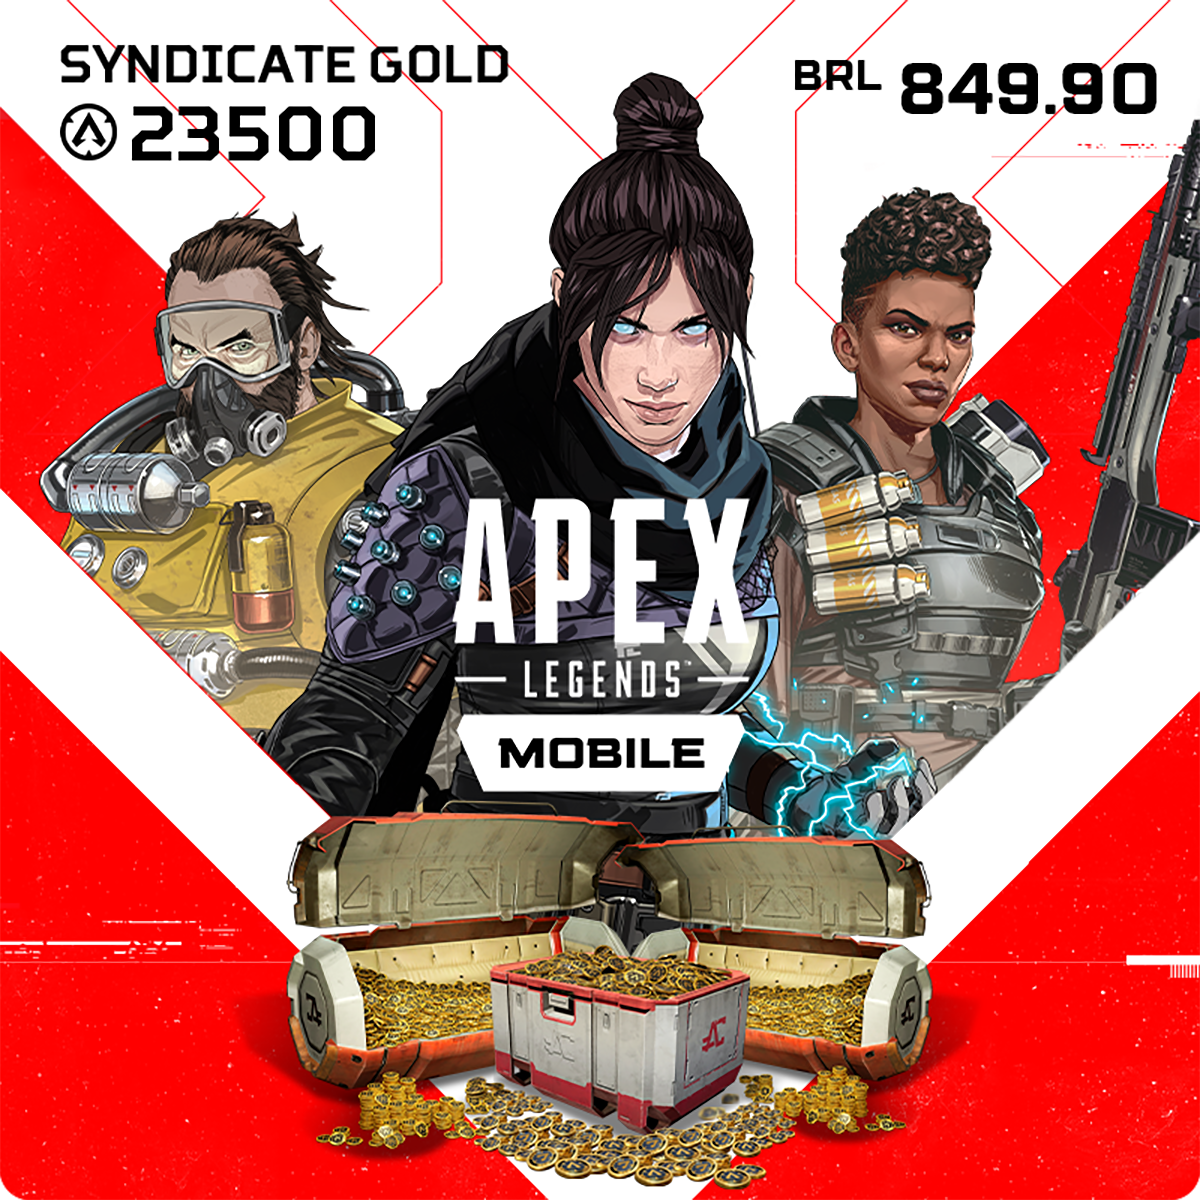 comprar-apex-legends-mobile-23500-syndicate-gold-trivia-pw